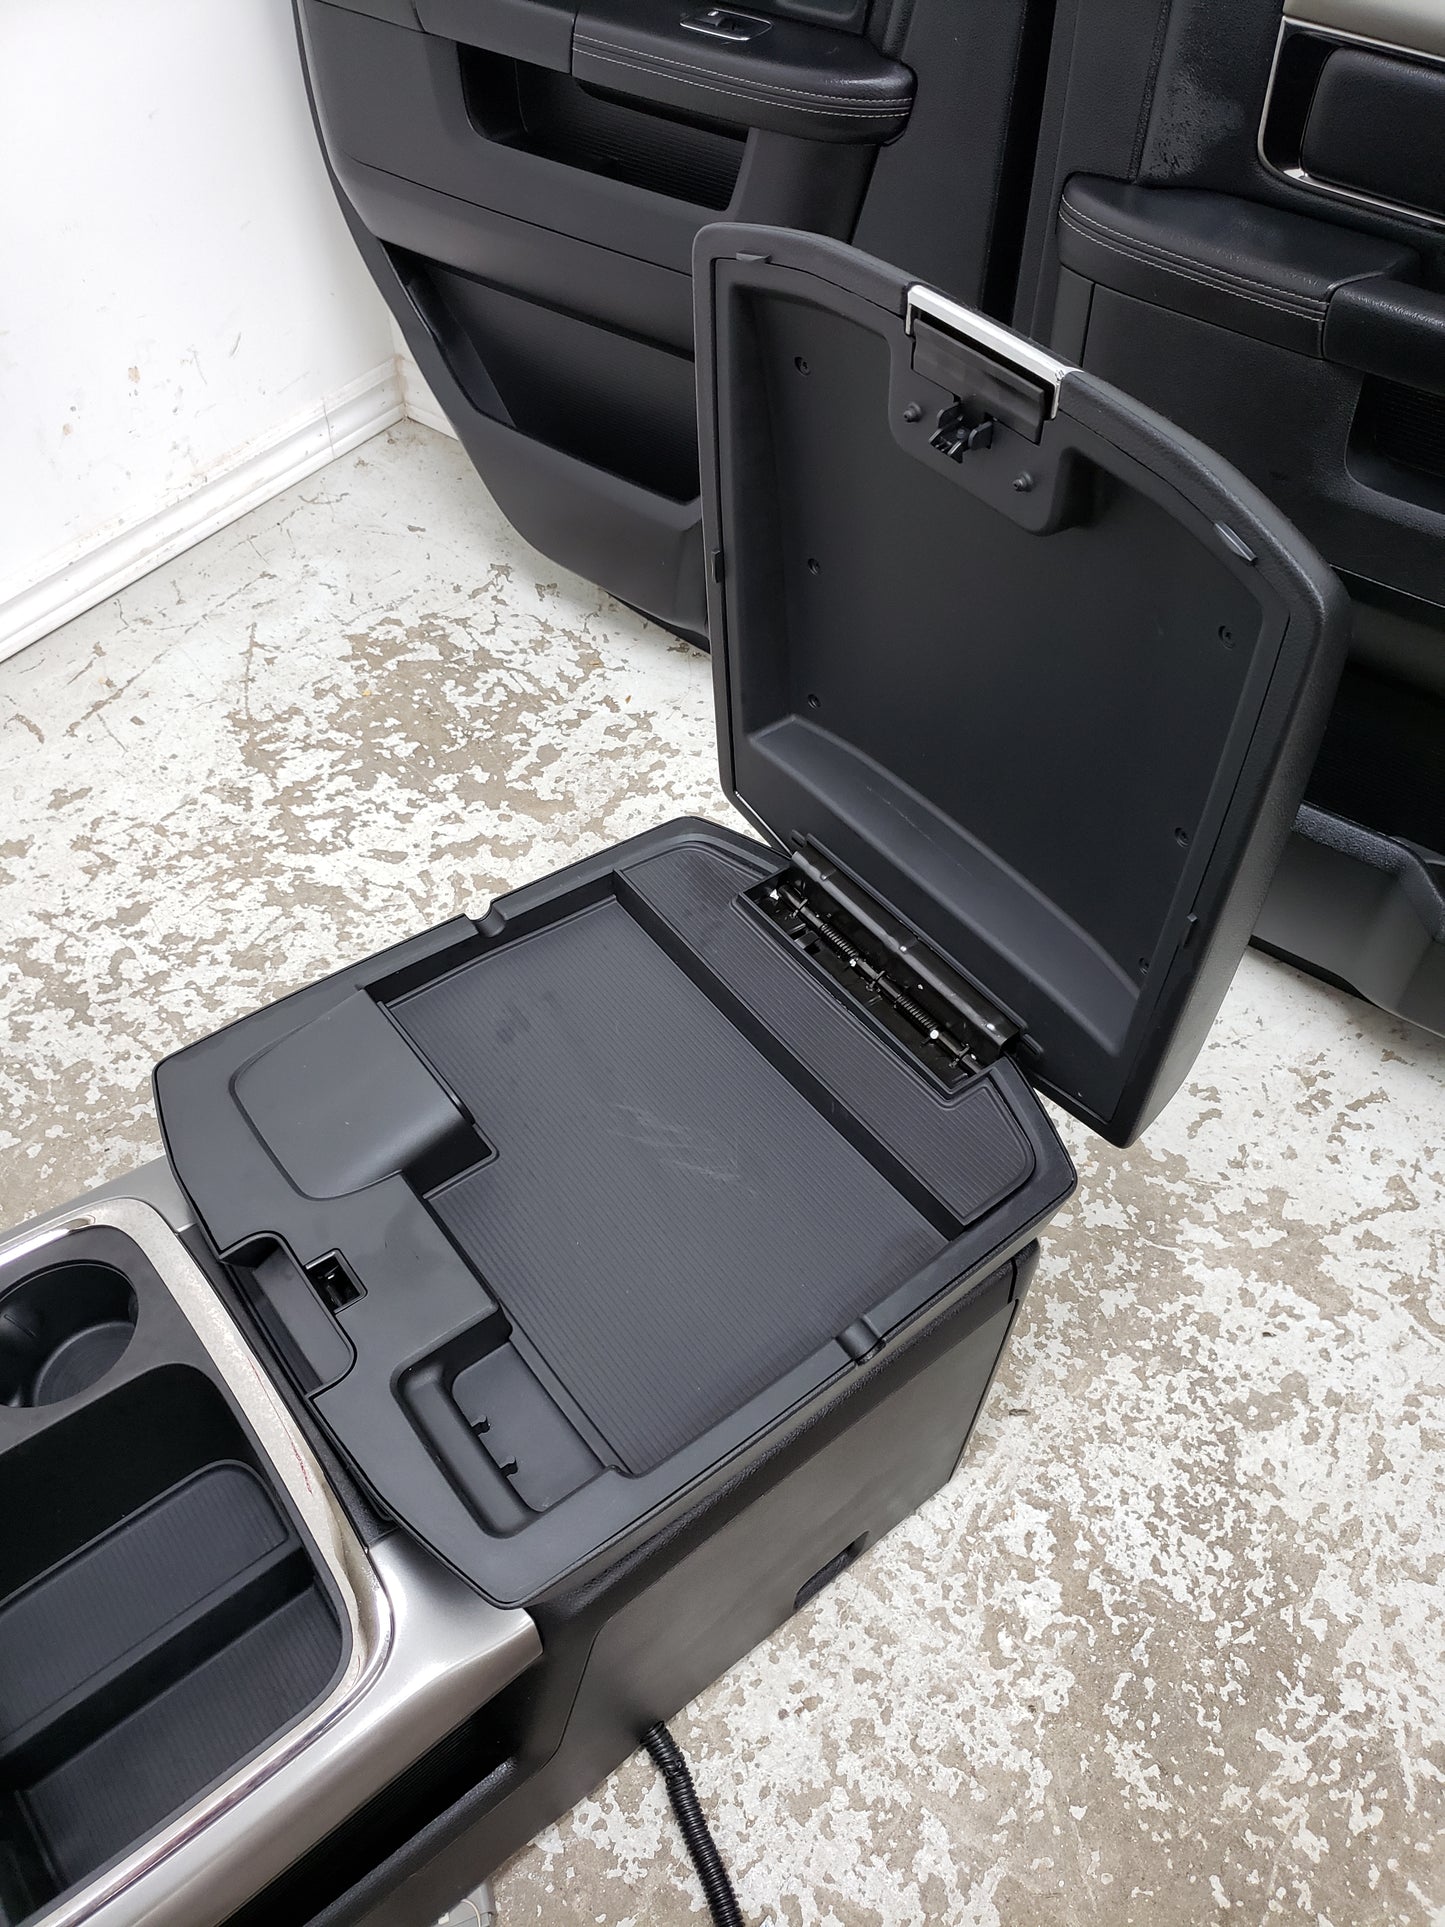 Dodge Ram 2018 BLACK LEATHER Truck Seats Console Door Pad Laramie